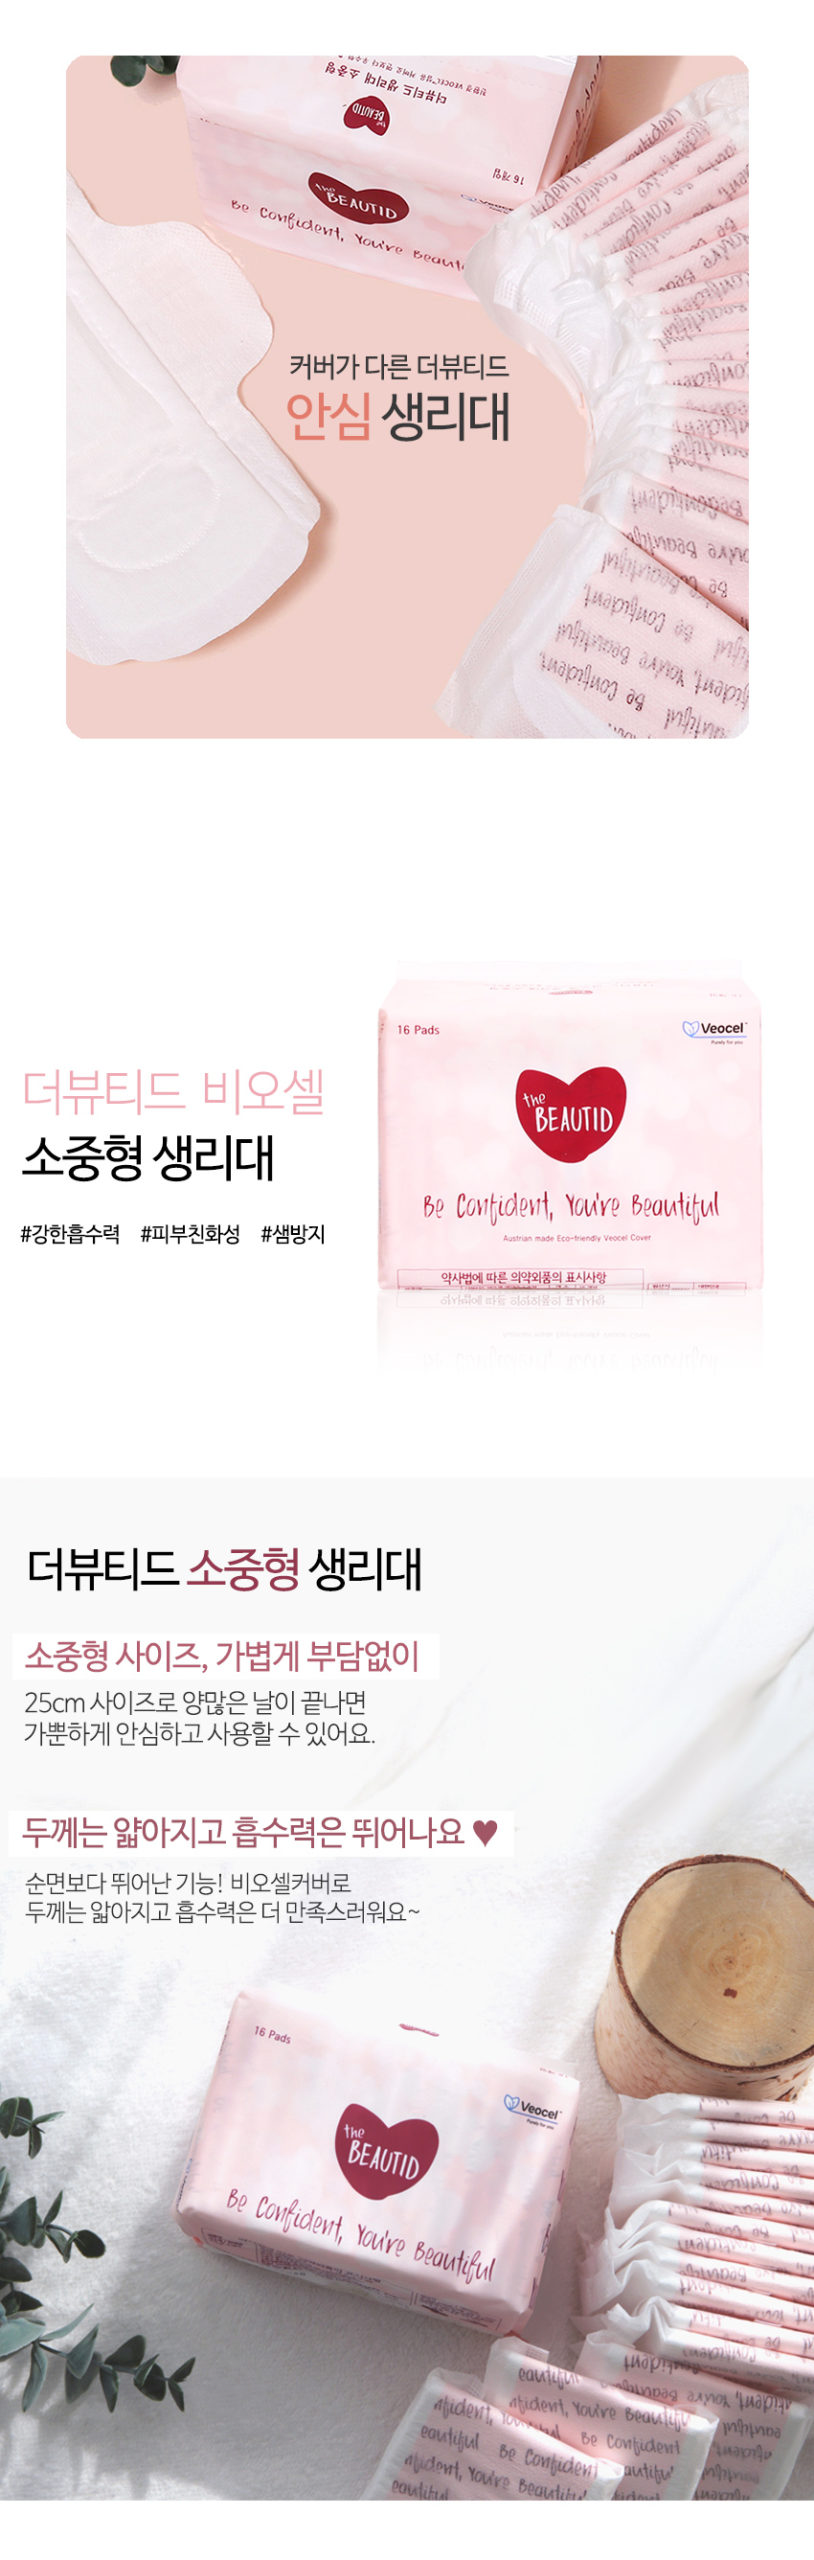 韓國食品-[The Beautid] 衛生巾 (中型) 25CM 16P